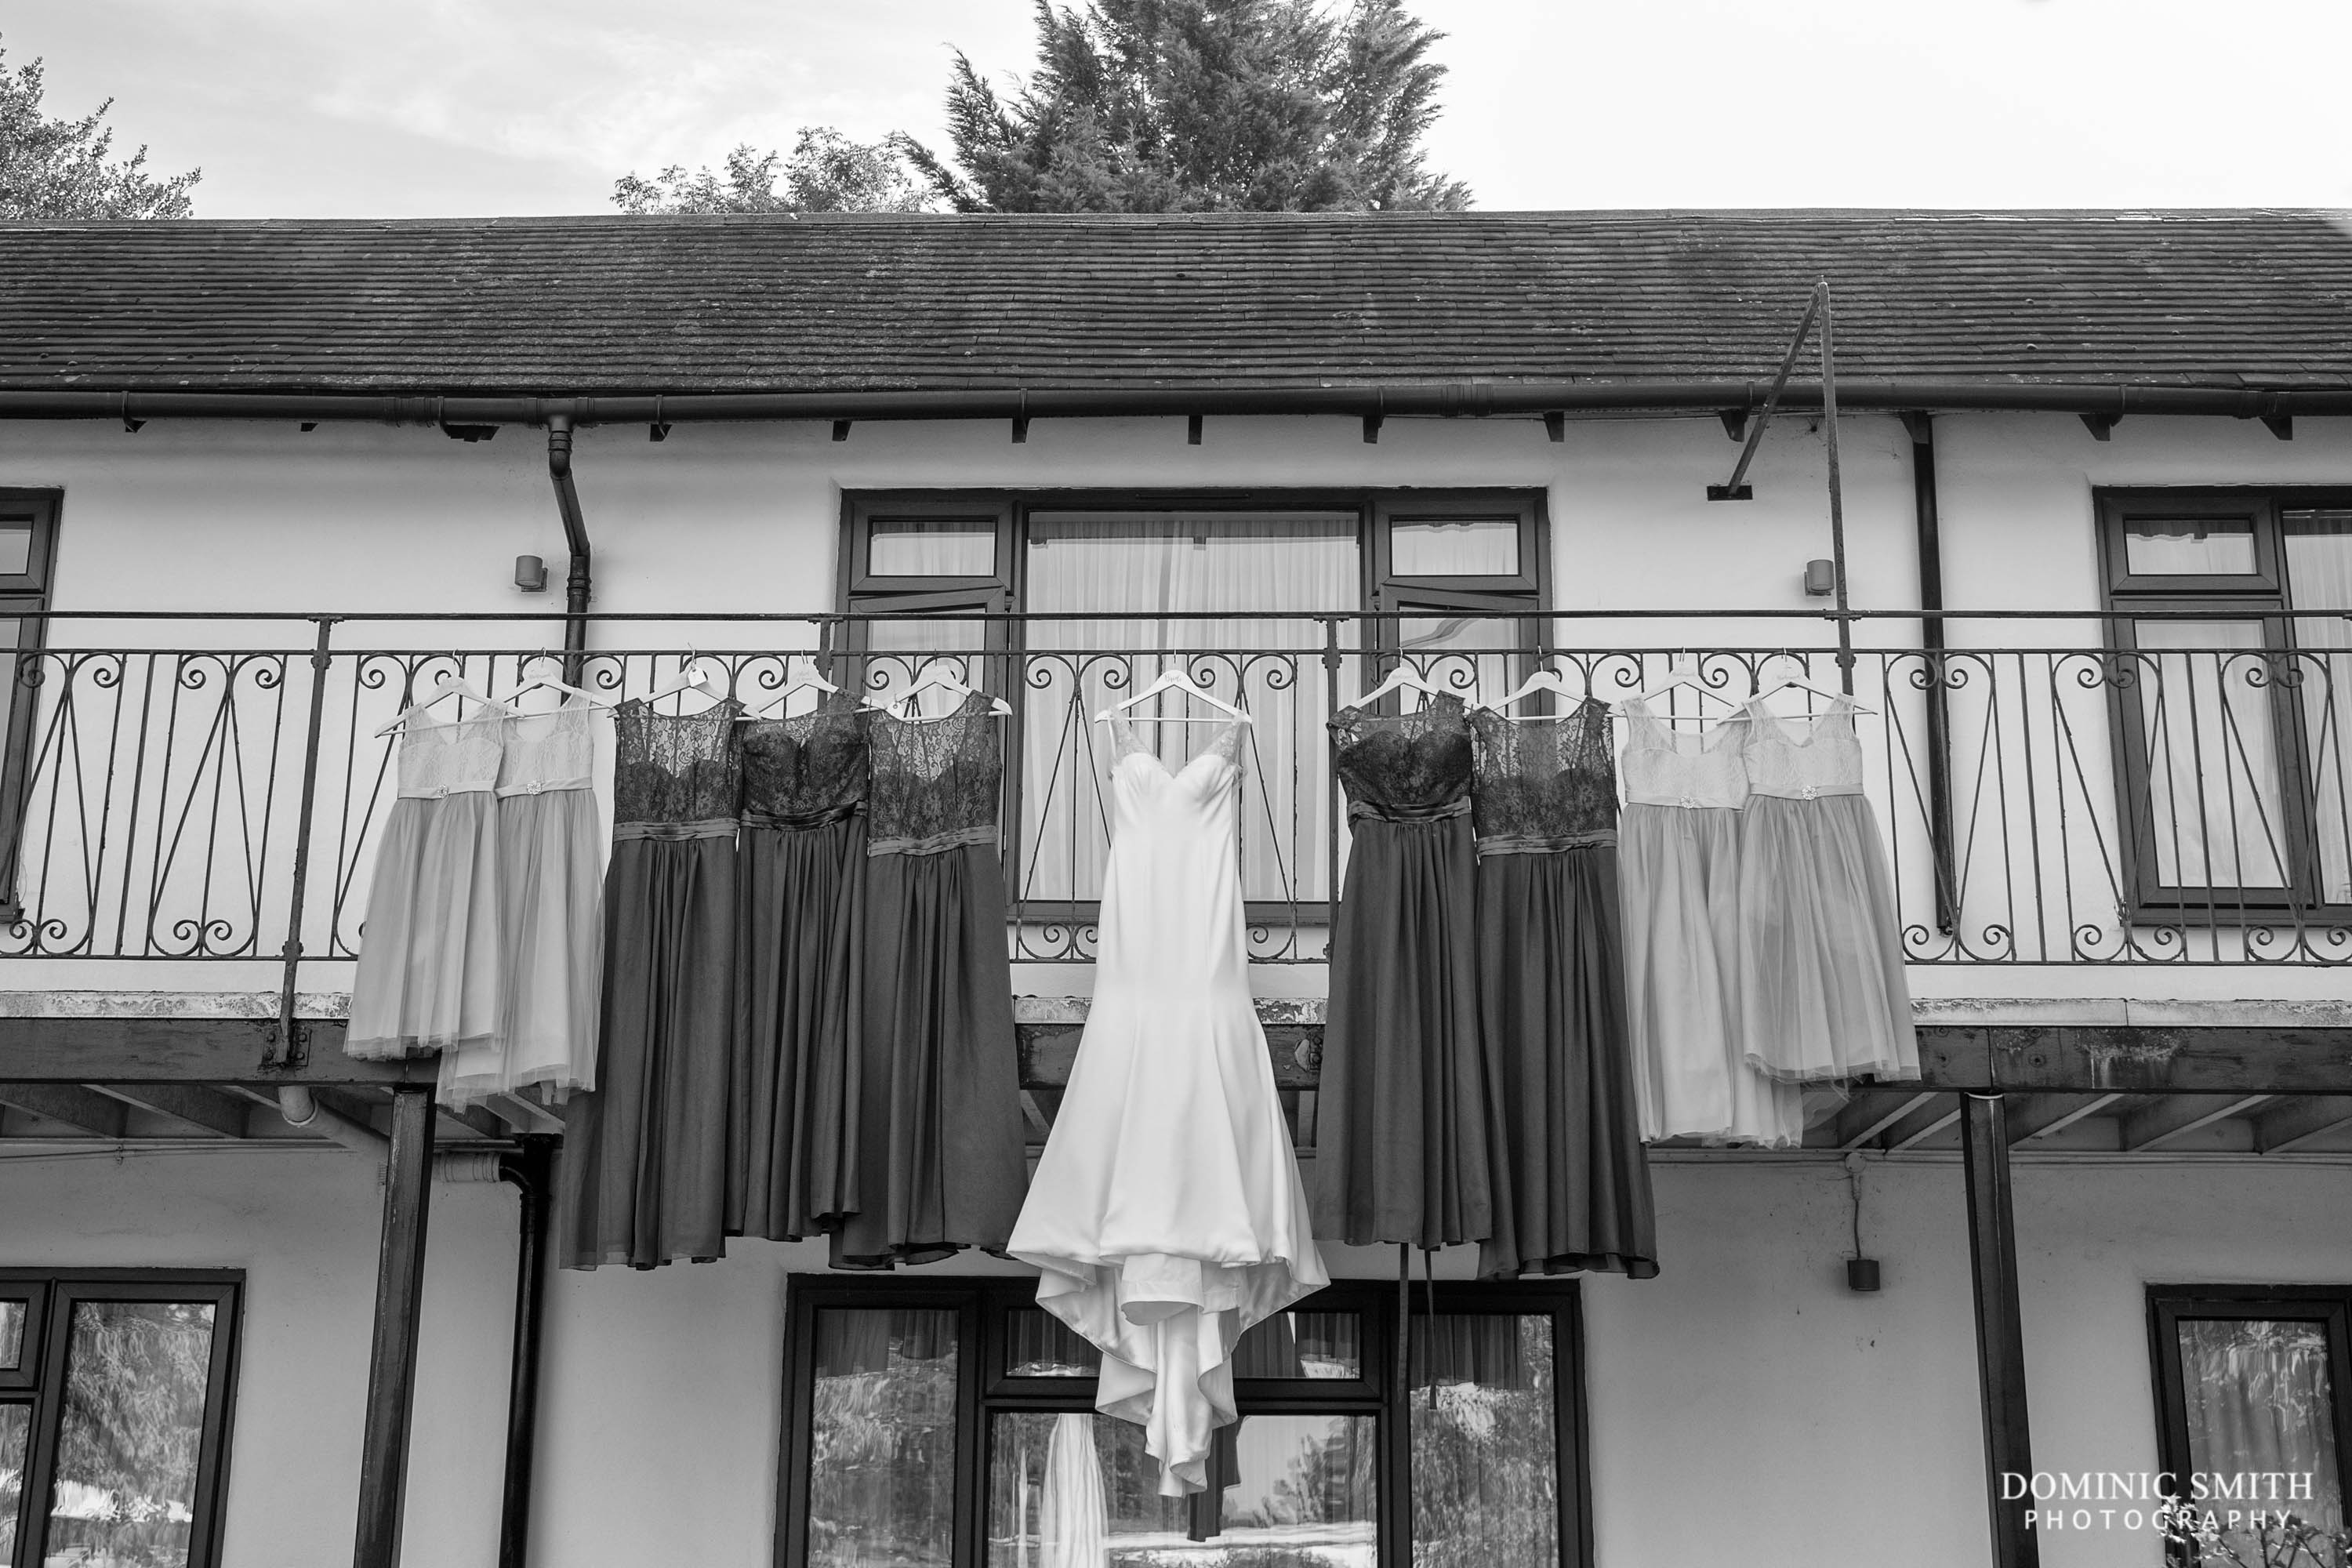 Bridal Dresses Hanging